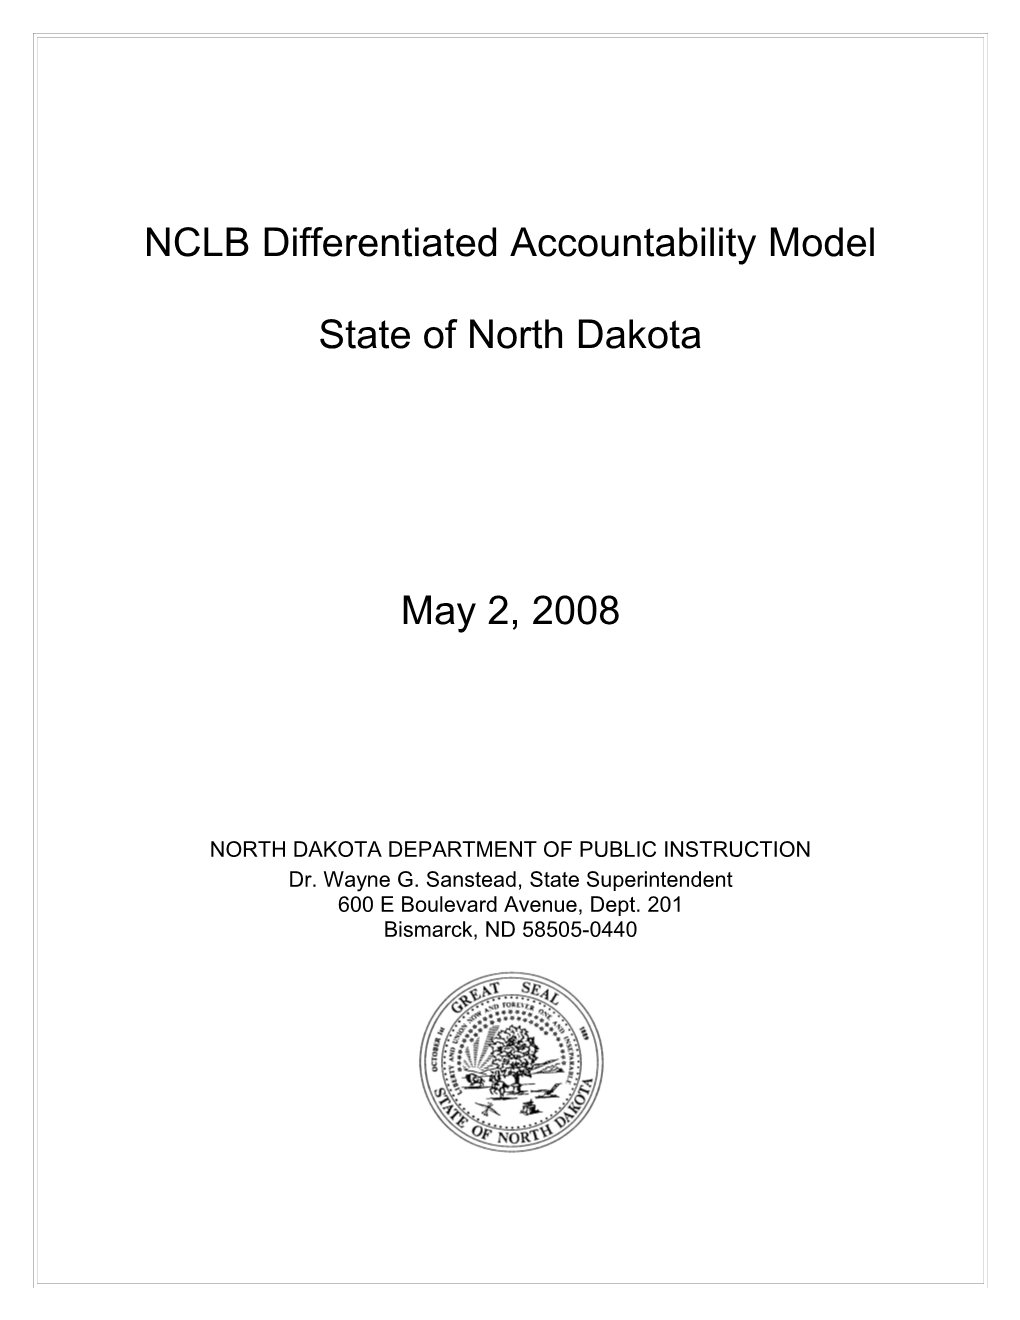 North Dakota Differentiated Accountability Model (MS WORD)